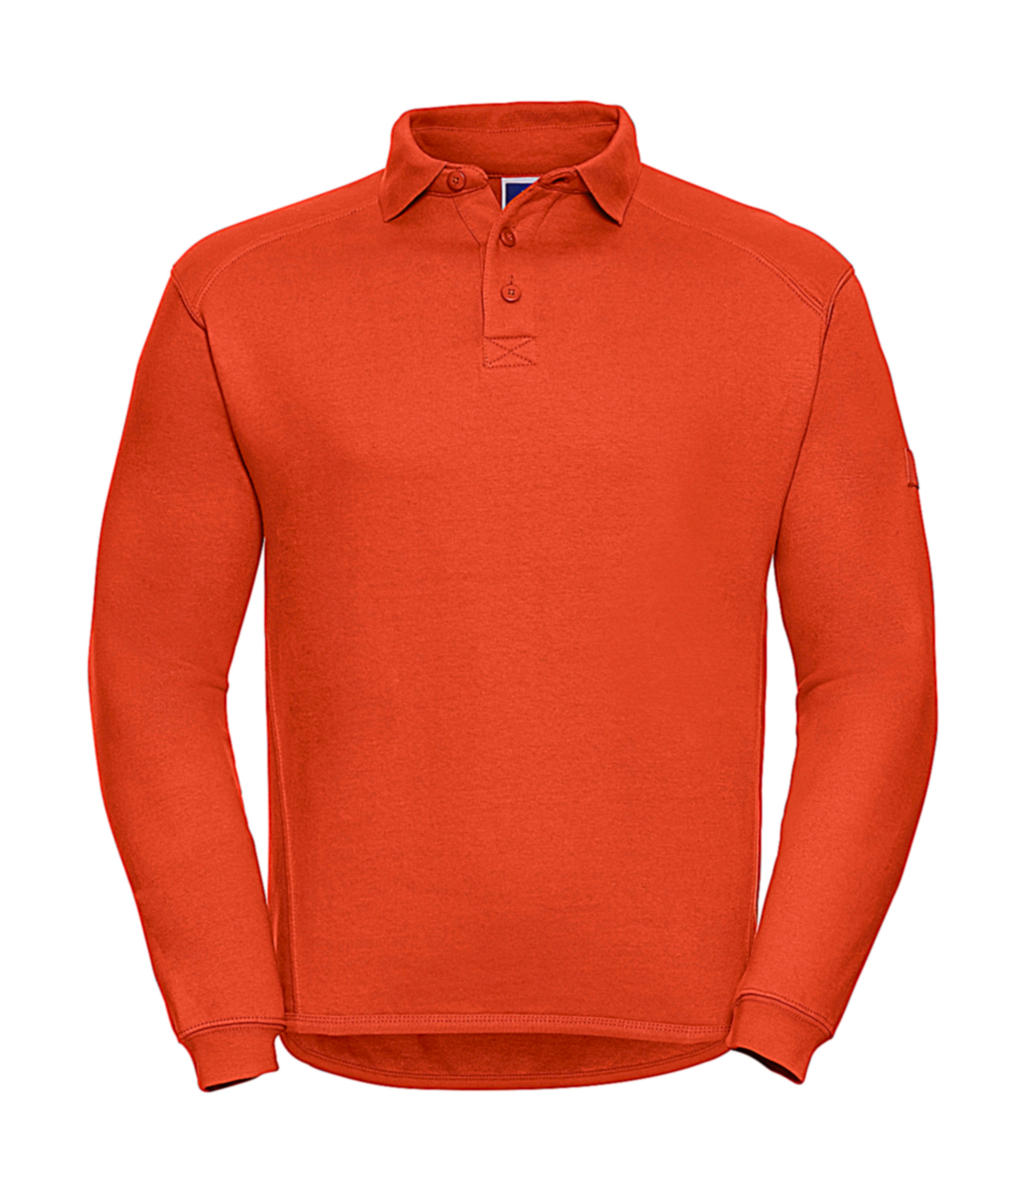  Heavy Duty Collar Sweatshirt in Farbe Orange